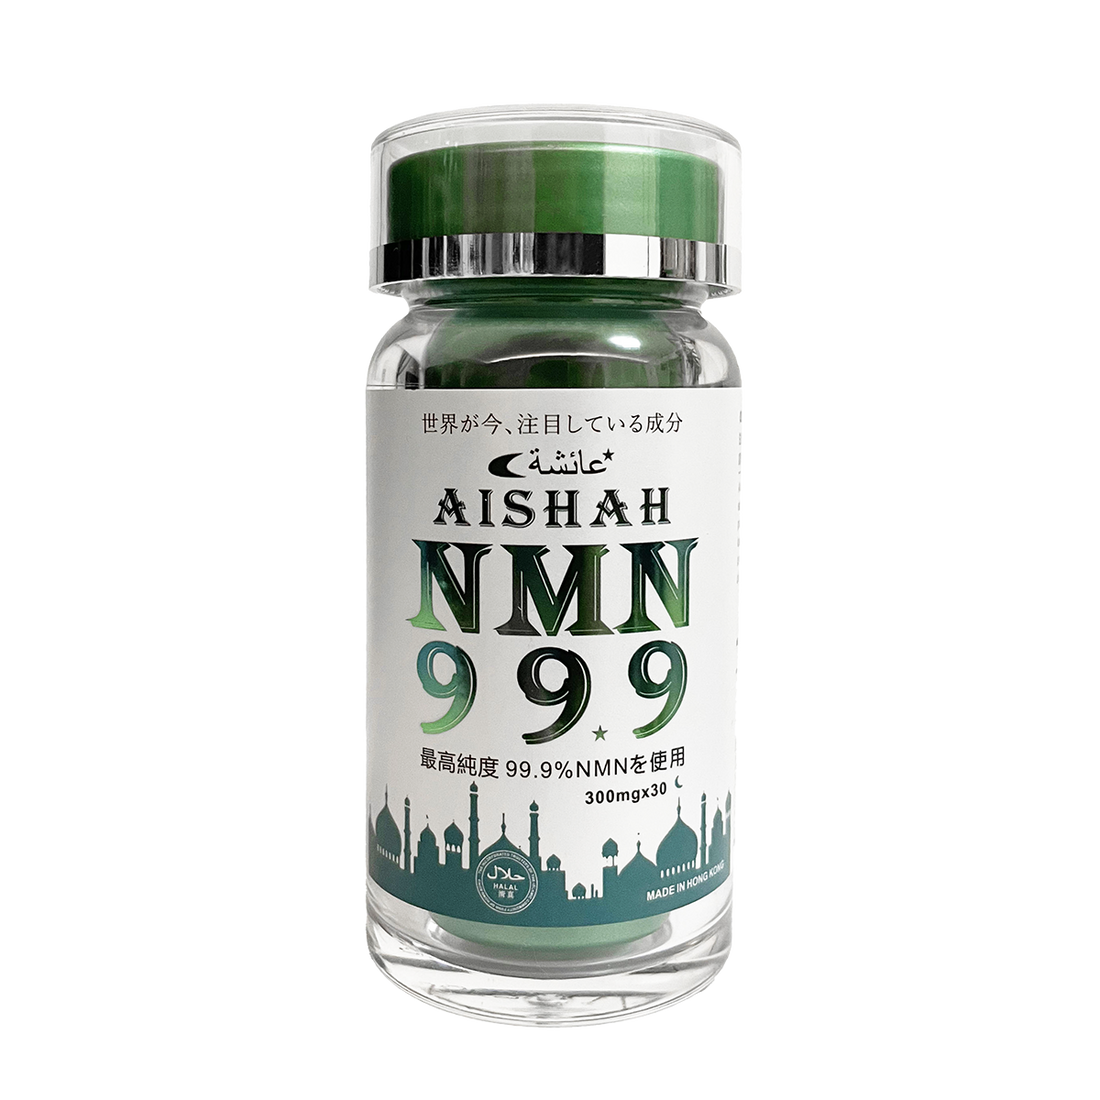 AISHAH NMN 999 符合「清真」Halal 食品 最高純度99.9%NMN